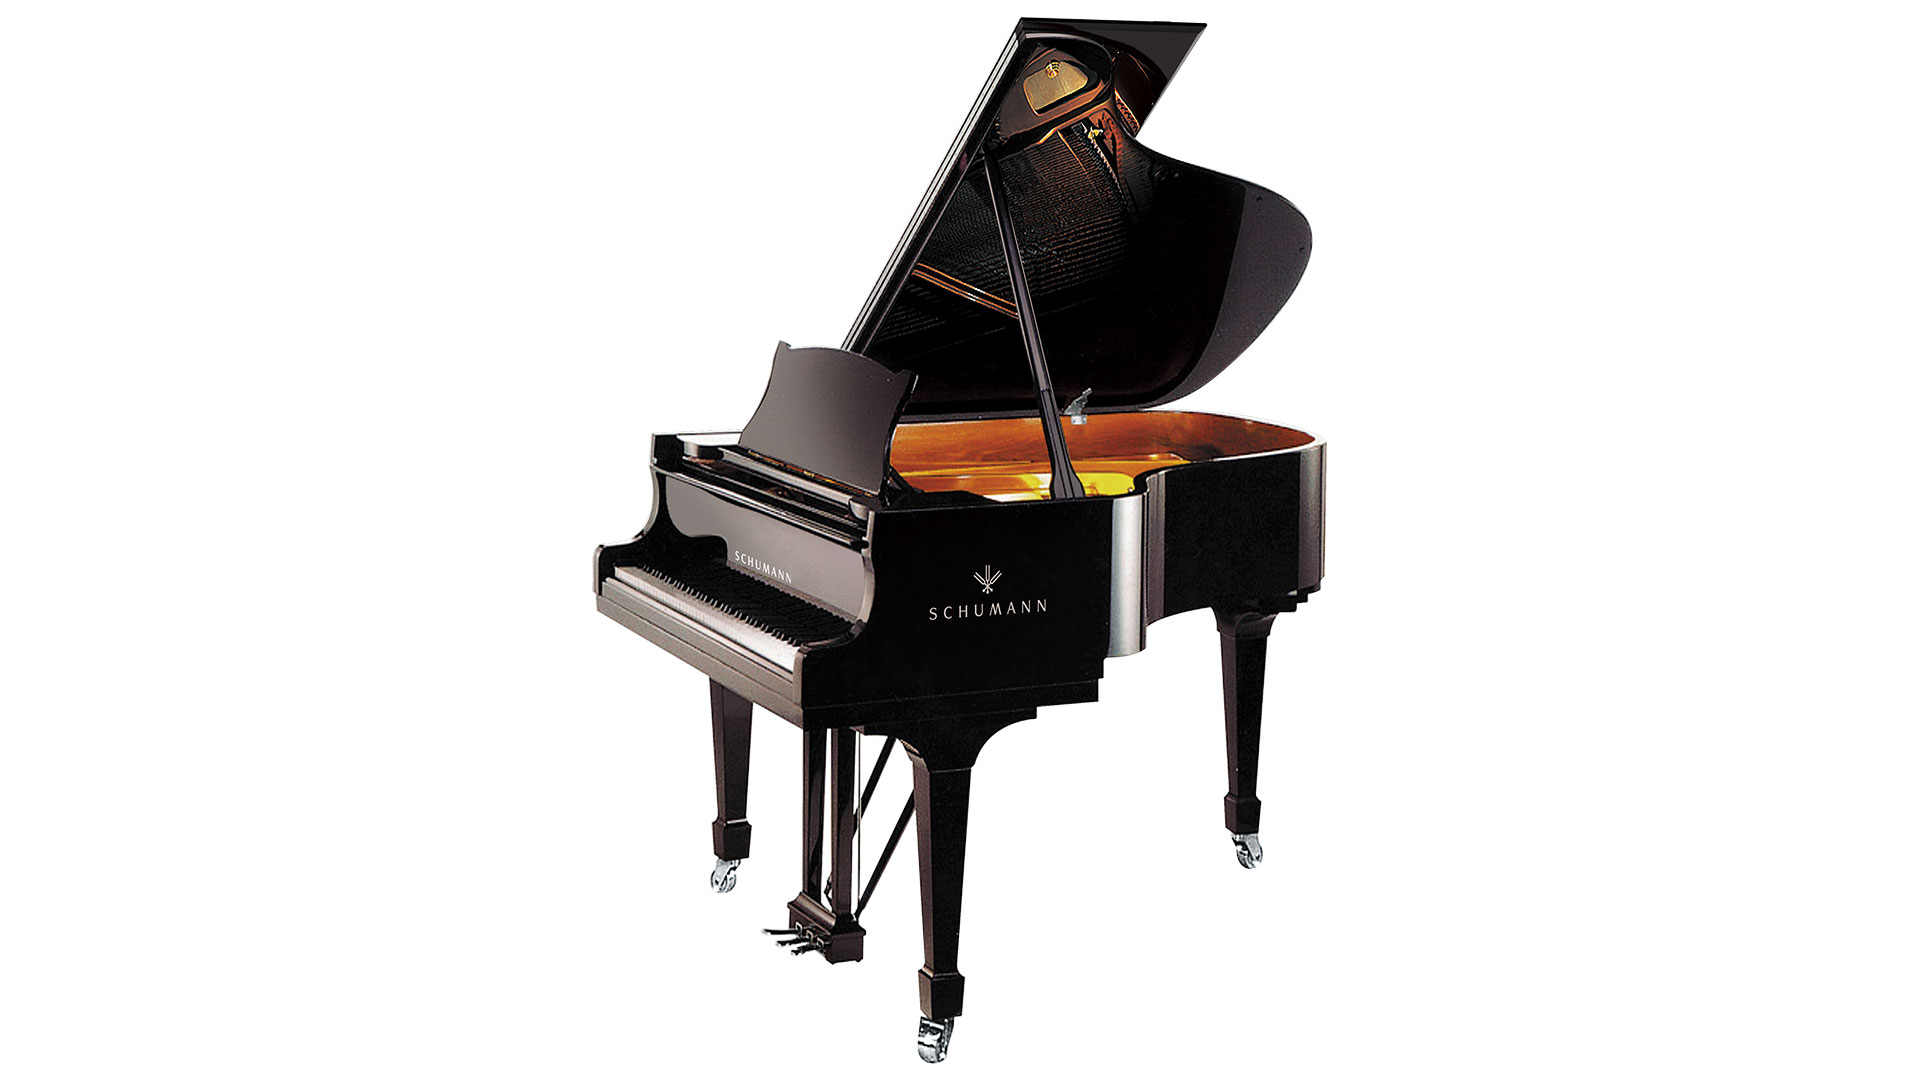 Schumann baby grand piano Model GP-152